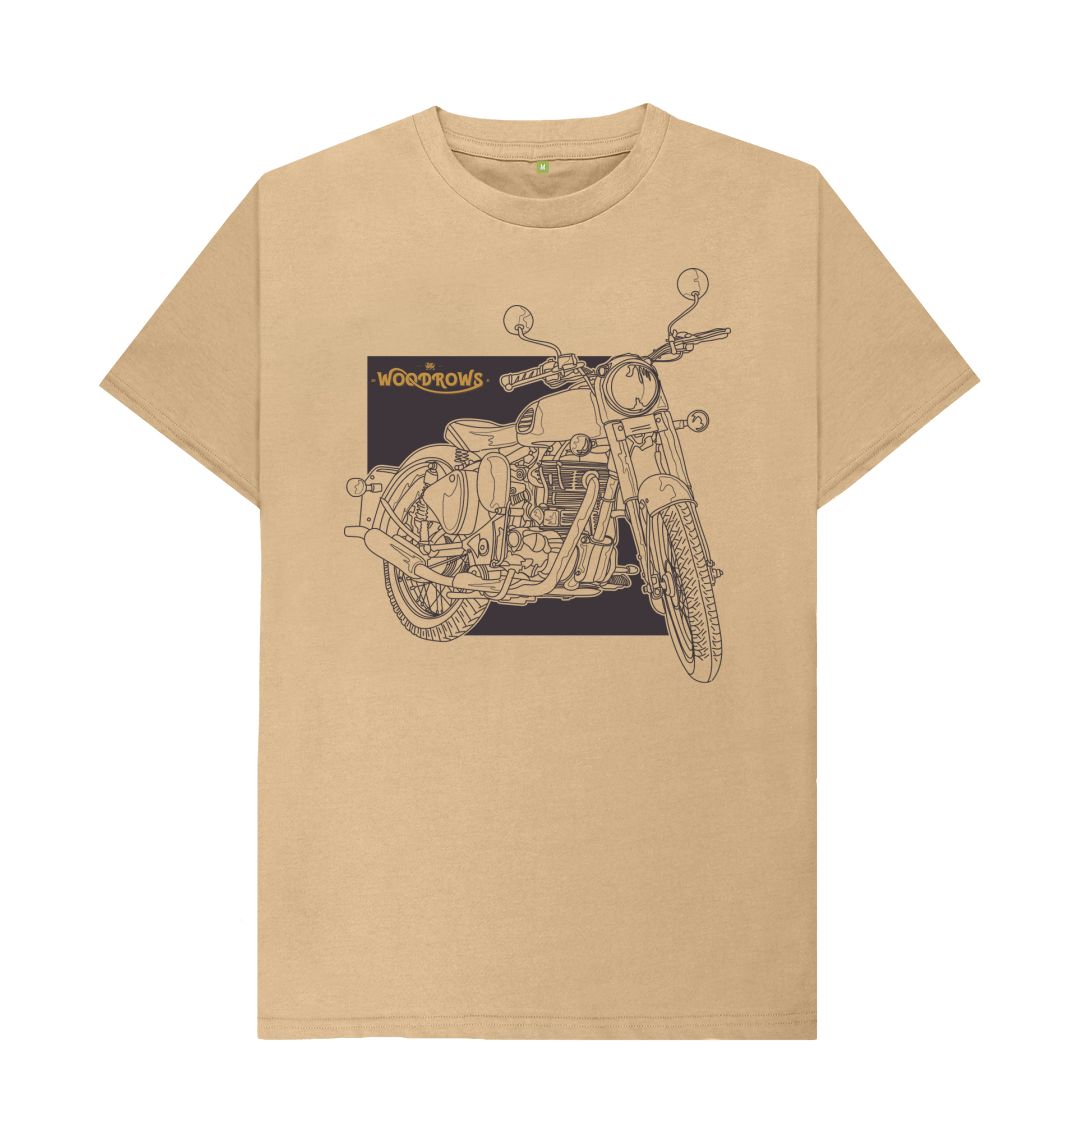 Sand Woodrow's Classic bike T-Shirt